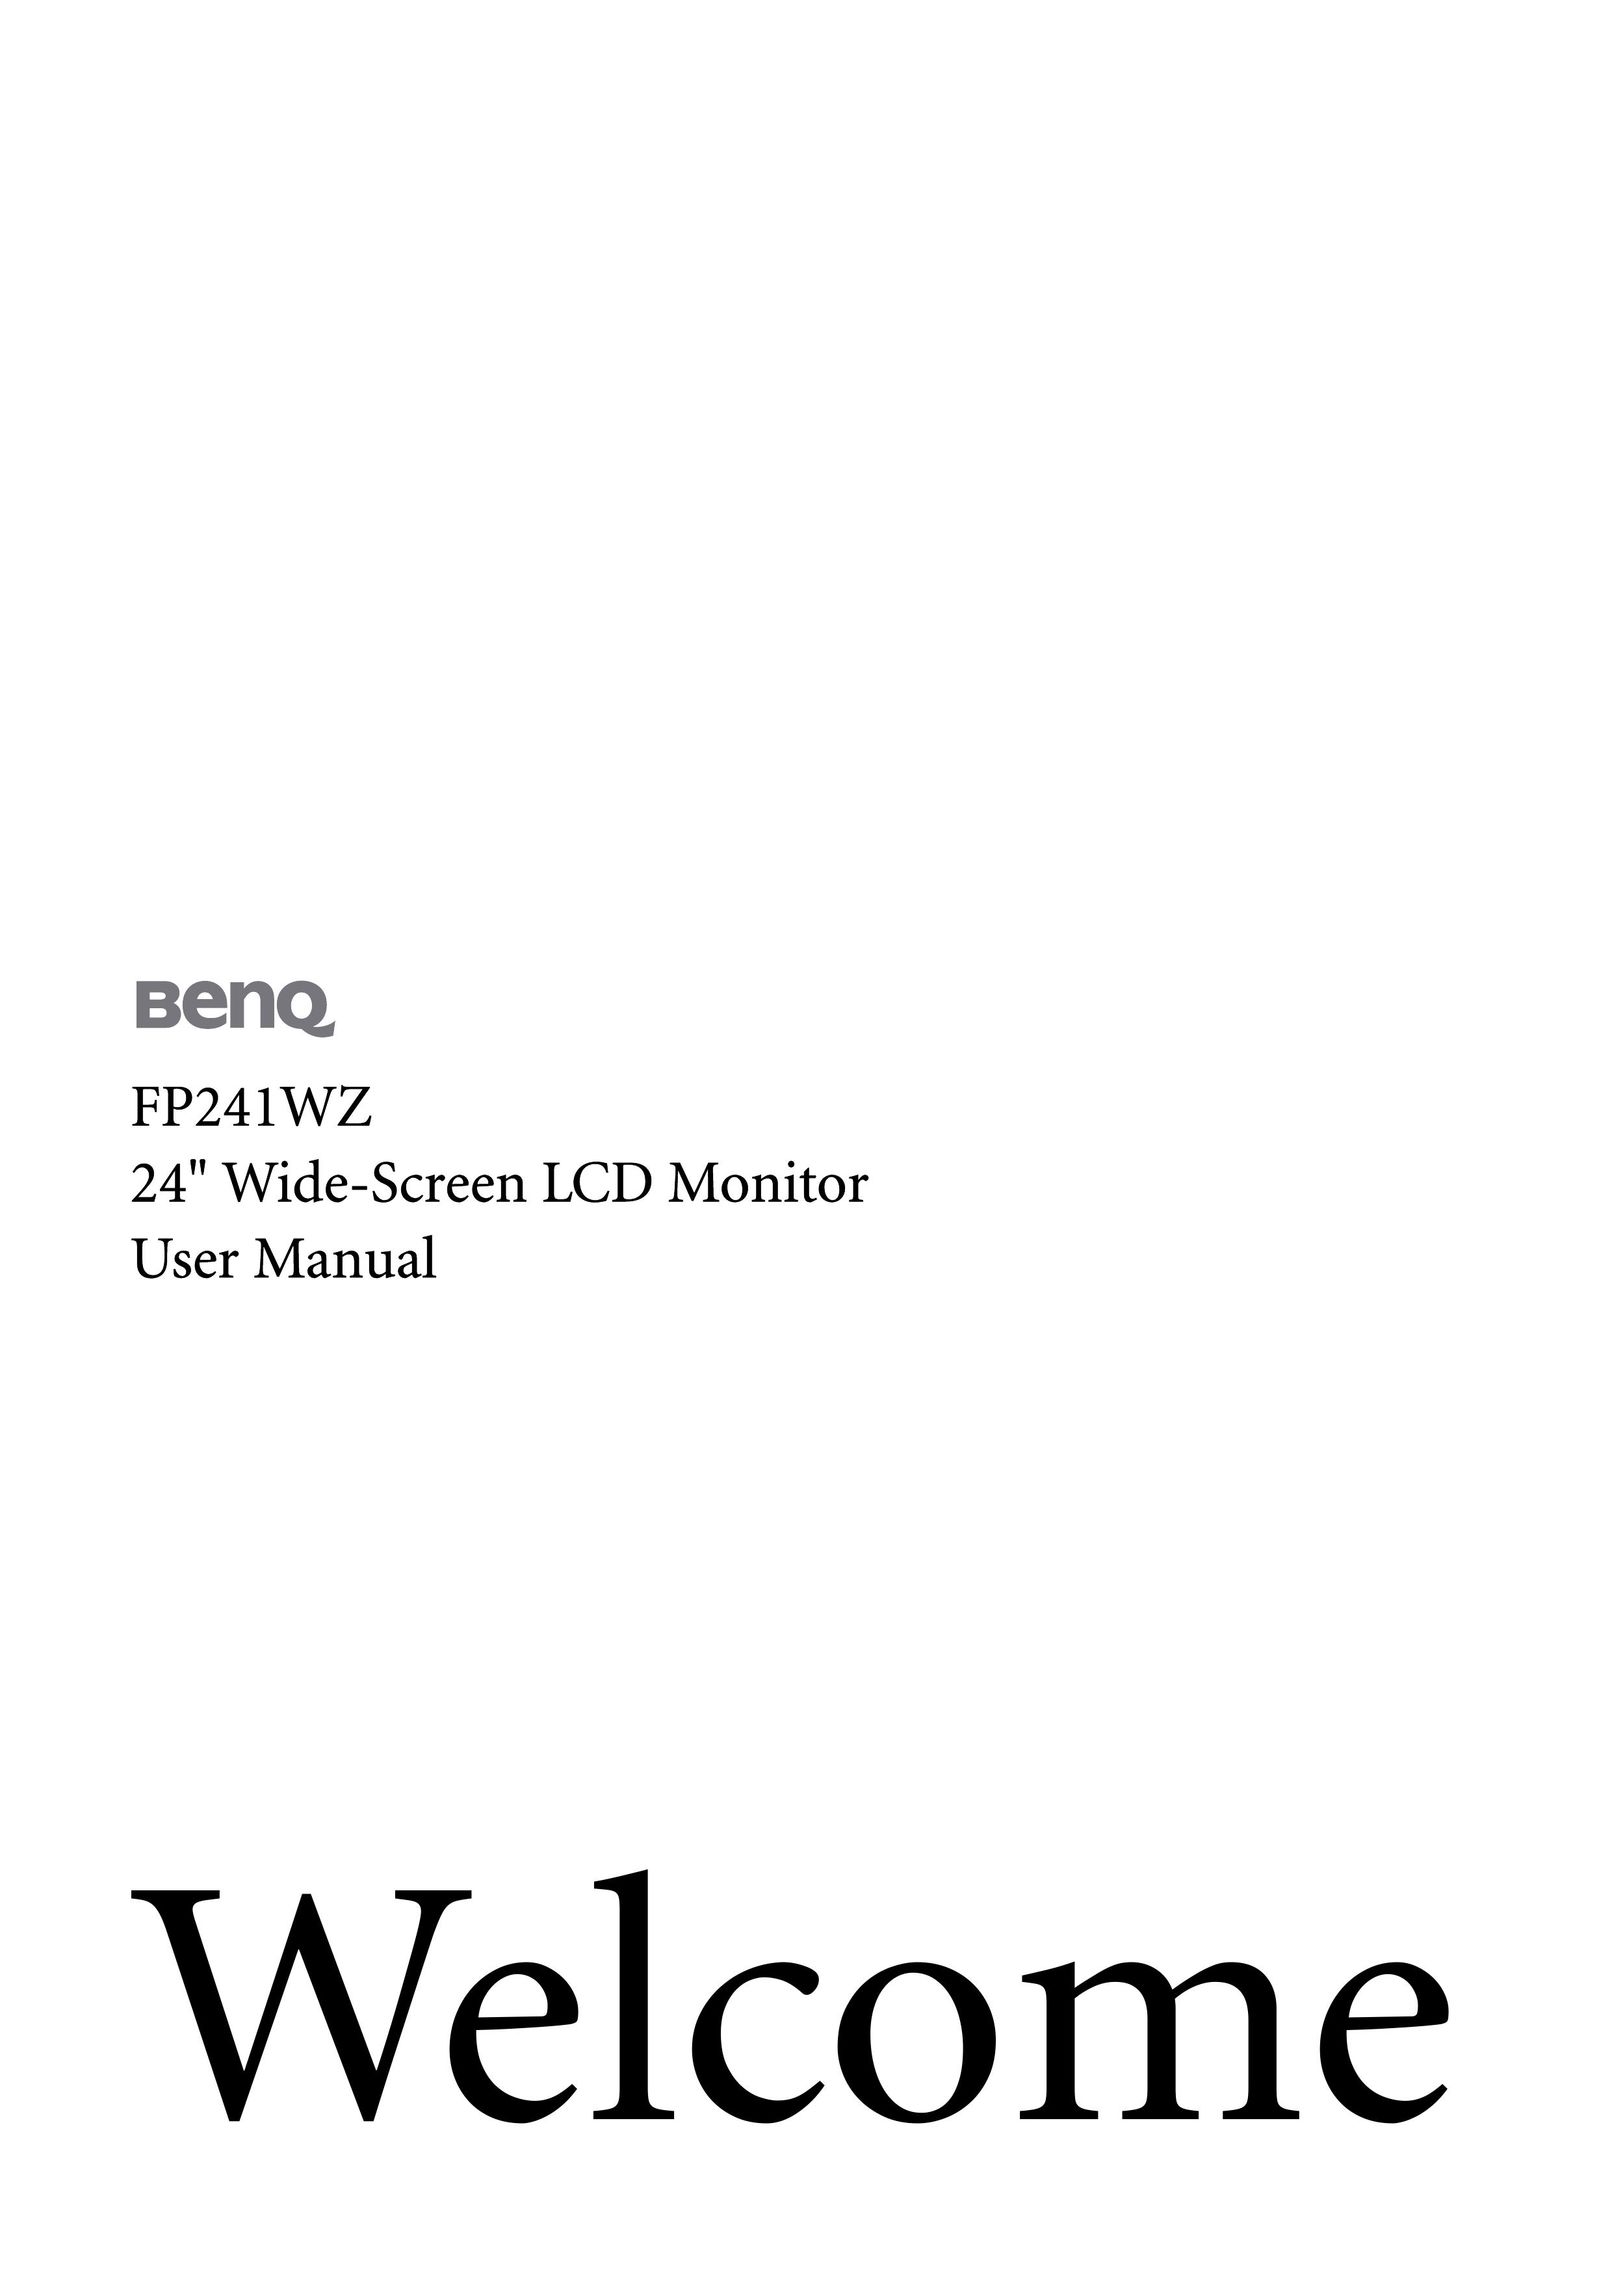 BenQ FP241WZ Computer Monitor User Manual (Page 1)